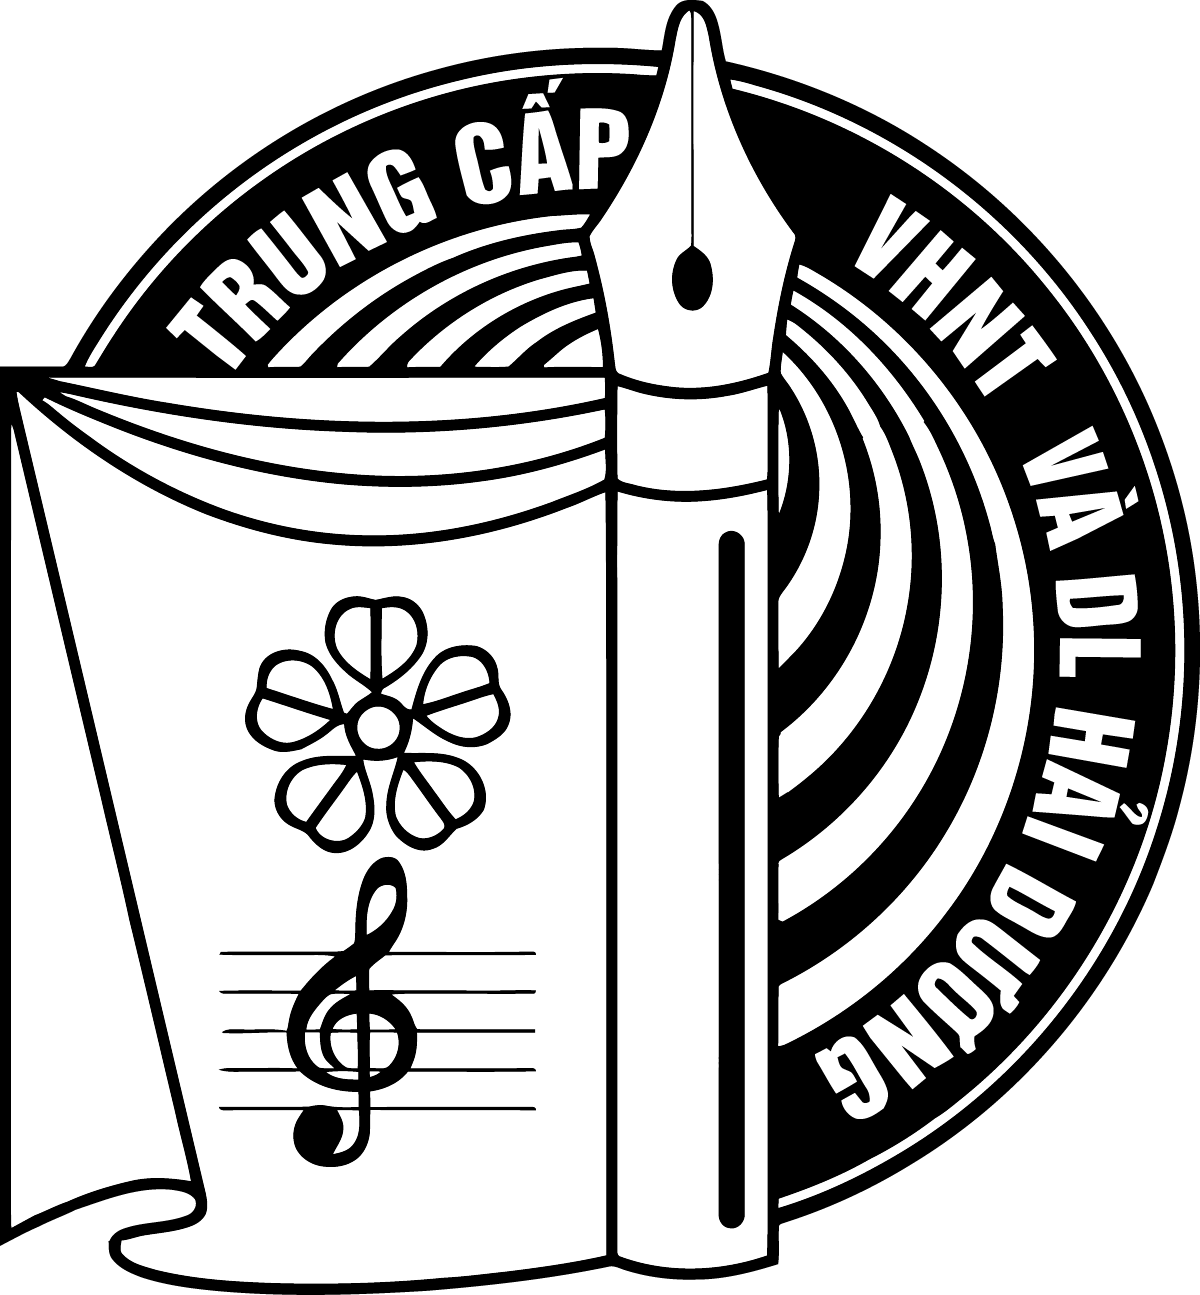 Logo Truong Trung cap Van hoa Nghe thuat va Da amba